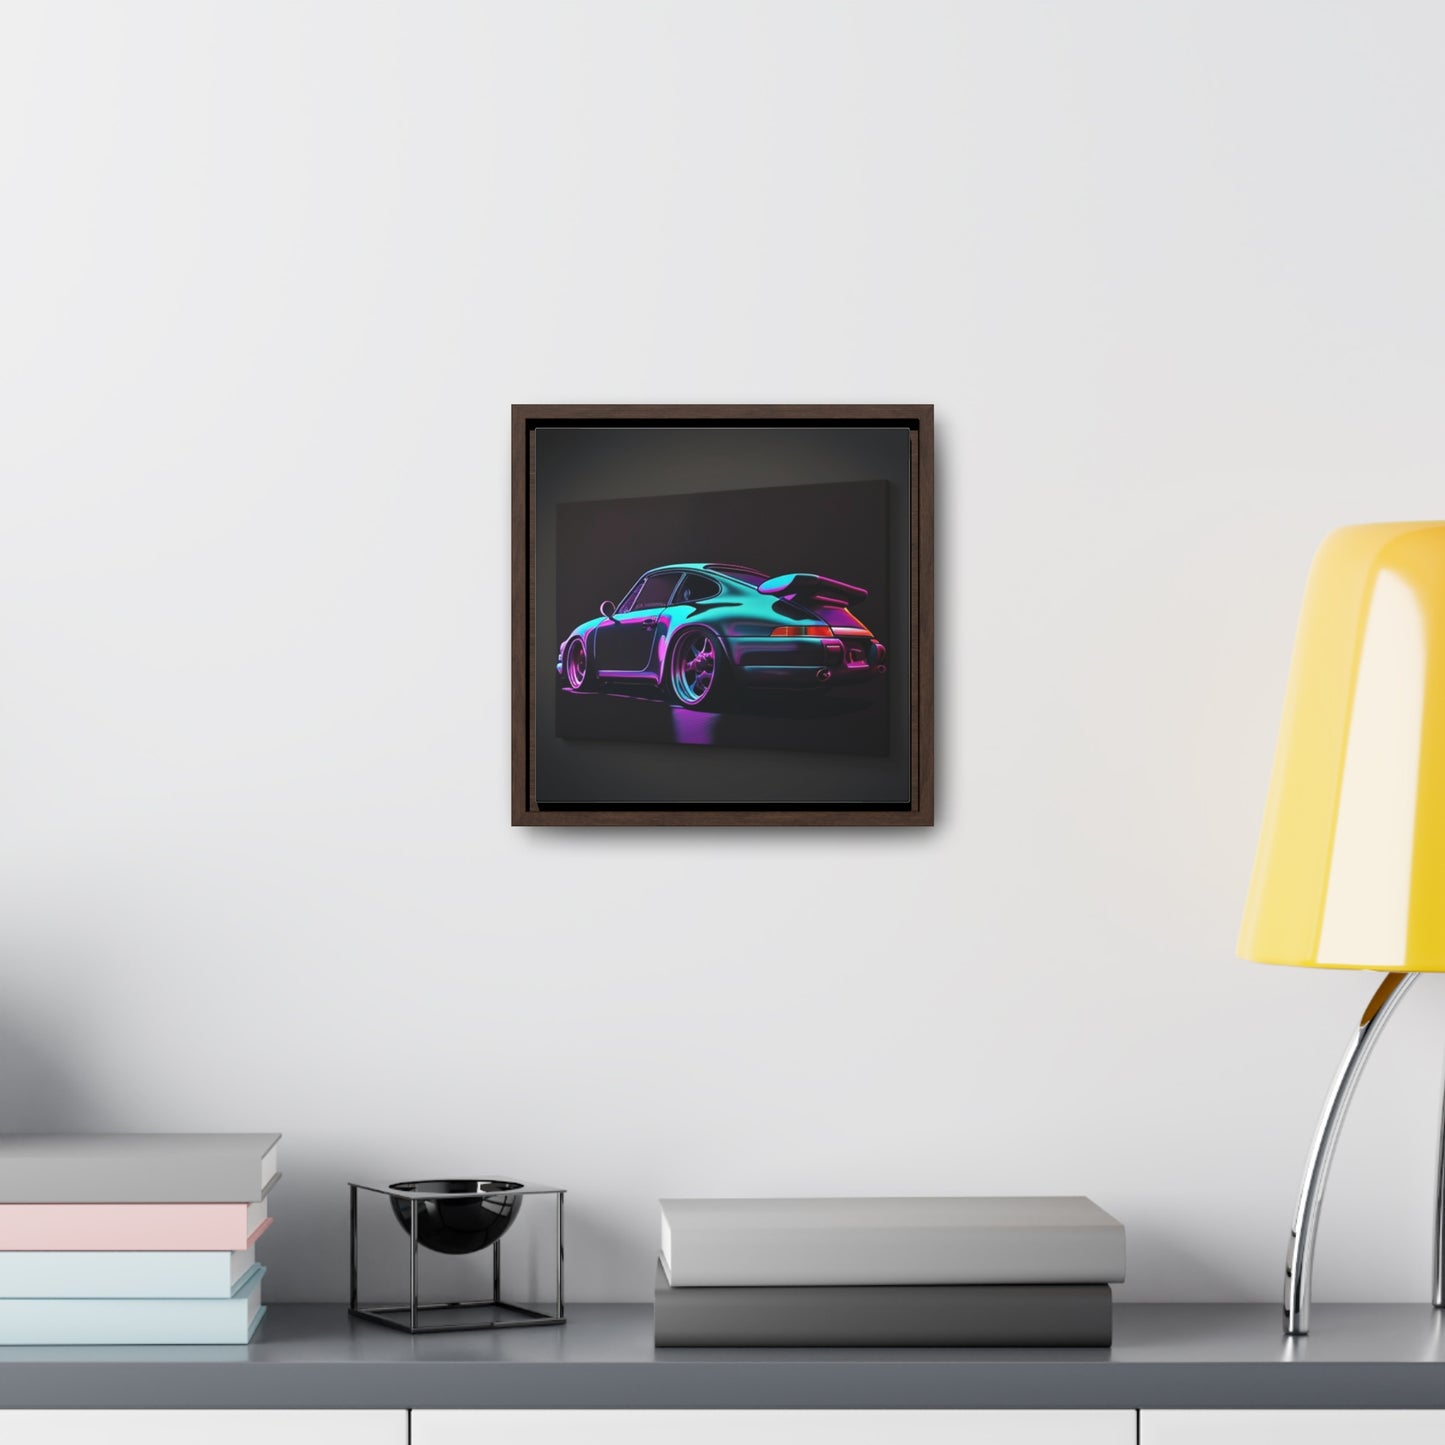 Gallery Canvas Wraps, Square Frame Porsche Purple 2